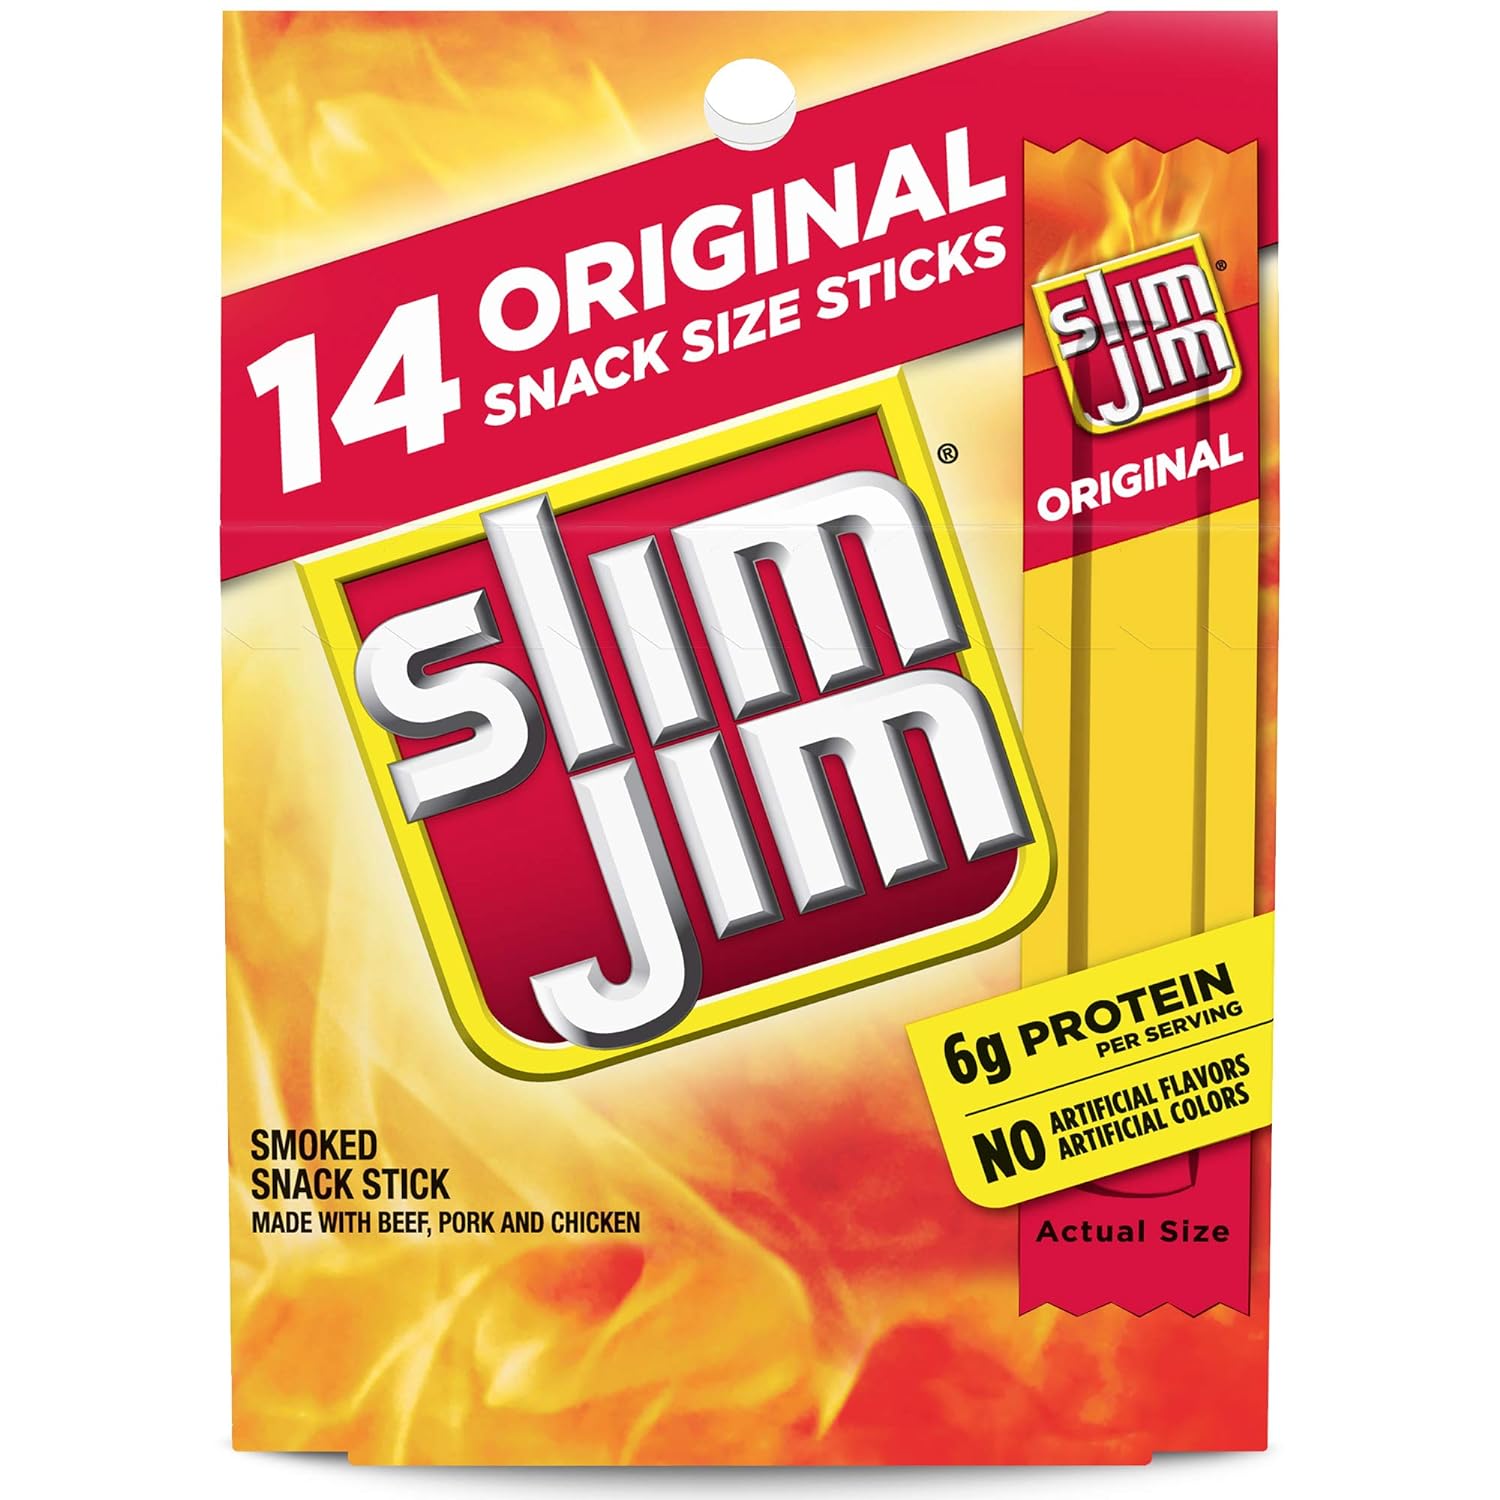 Slim Jim Snack Sized Original Smoked Snack Stick, Easy, On-the-Go School, Work and Travel Snacks, 0.28 OZ Meat Snacks, 14 Count